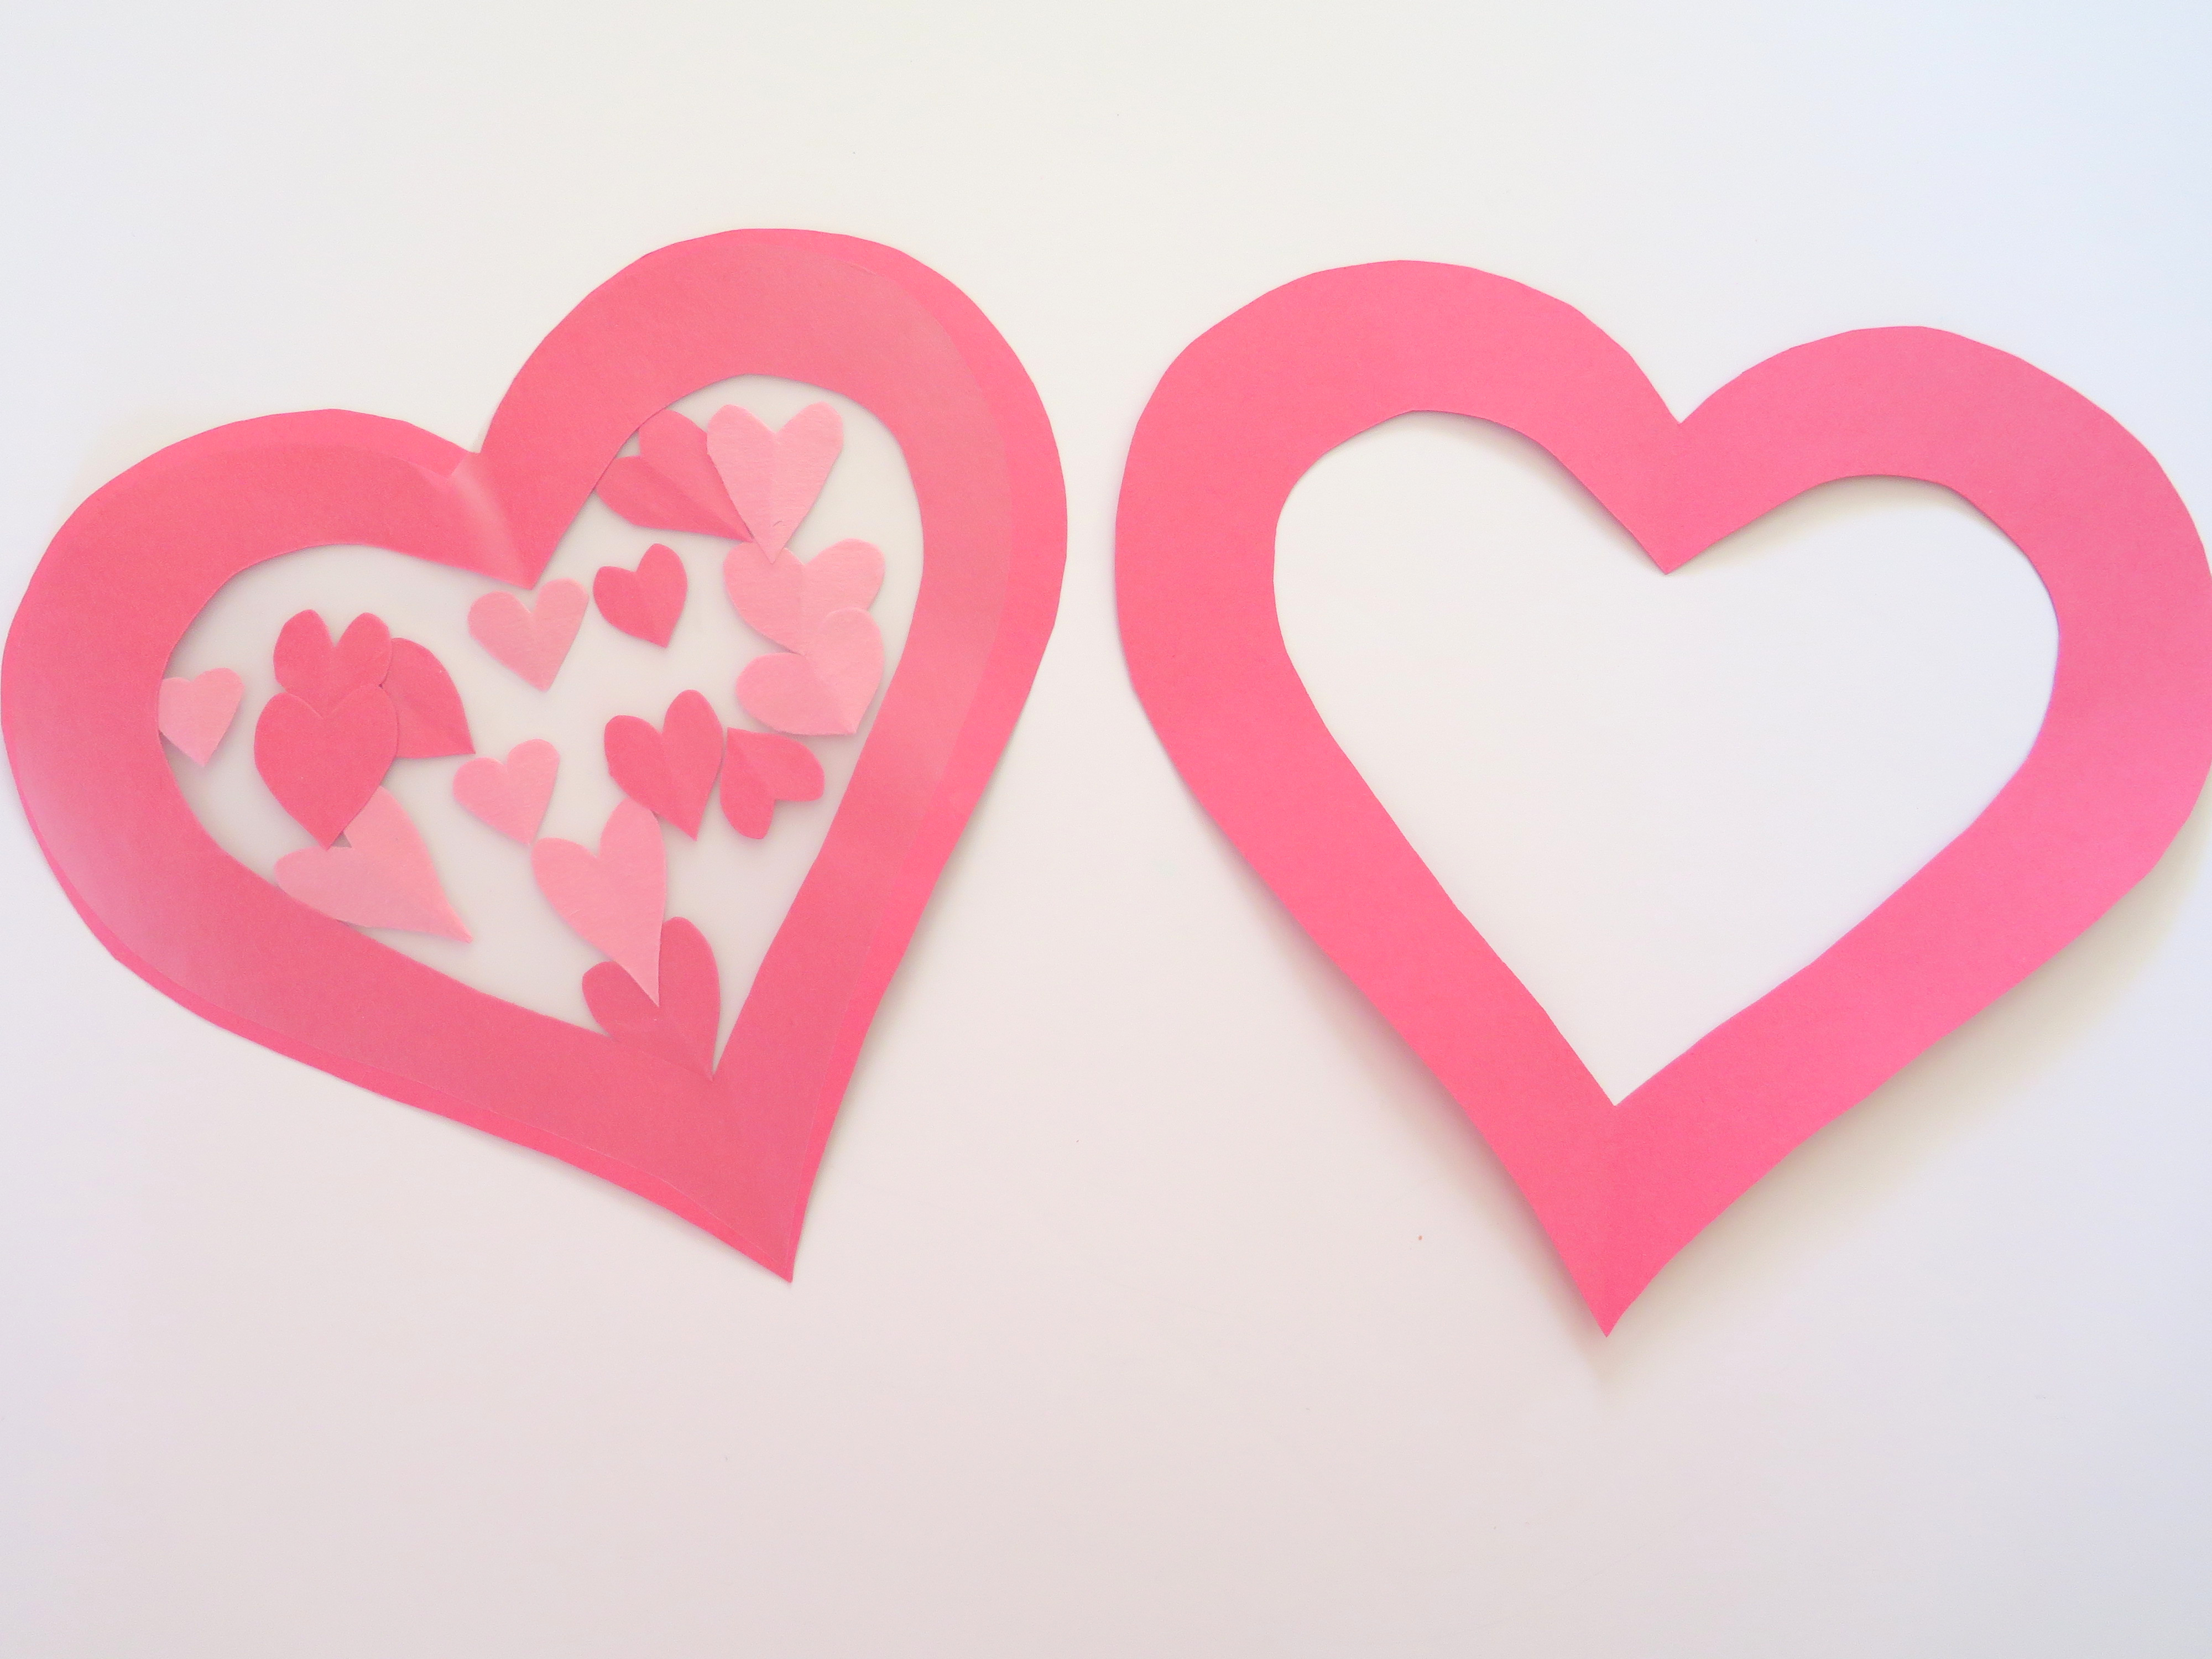 Suncatcher 2 hearts 1 with mini hearts